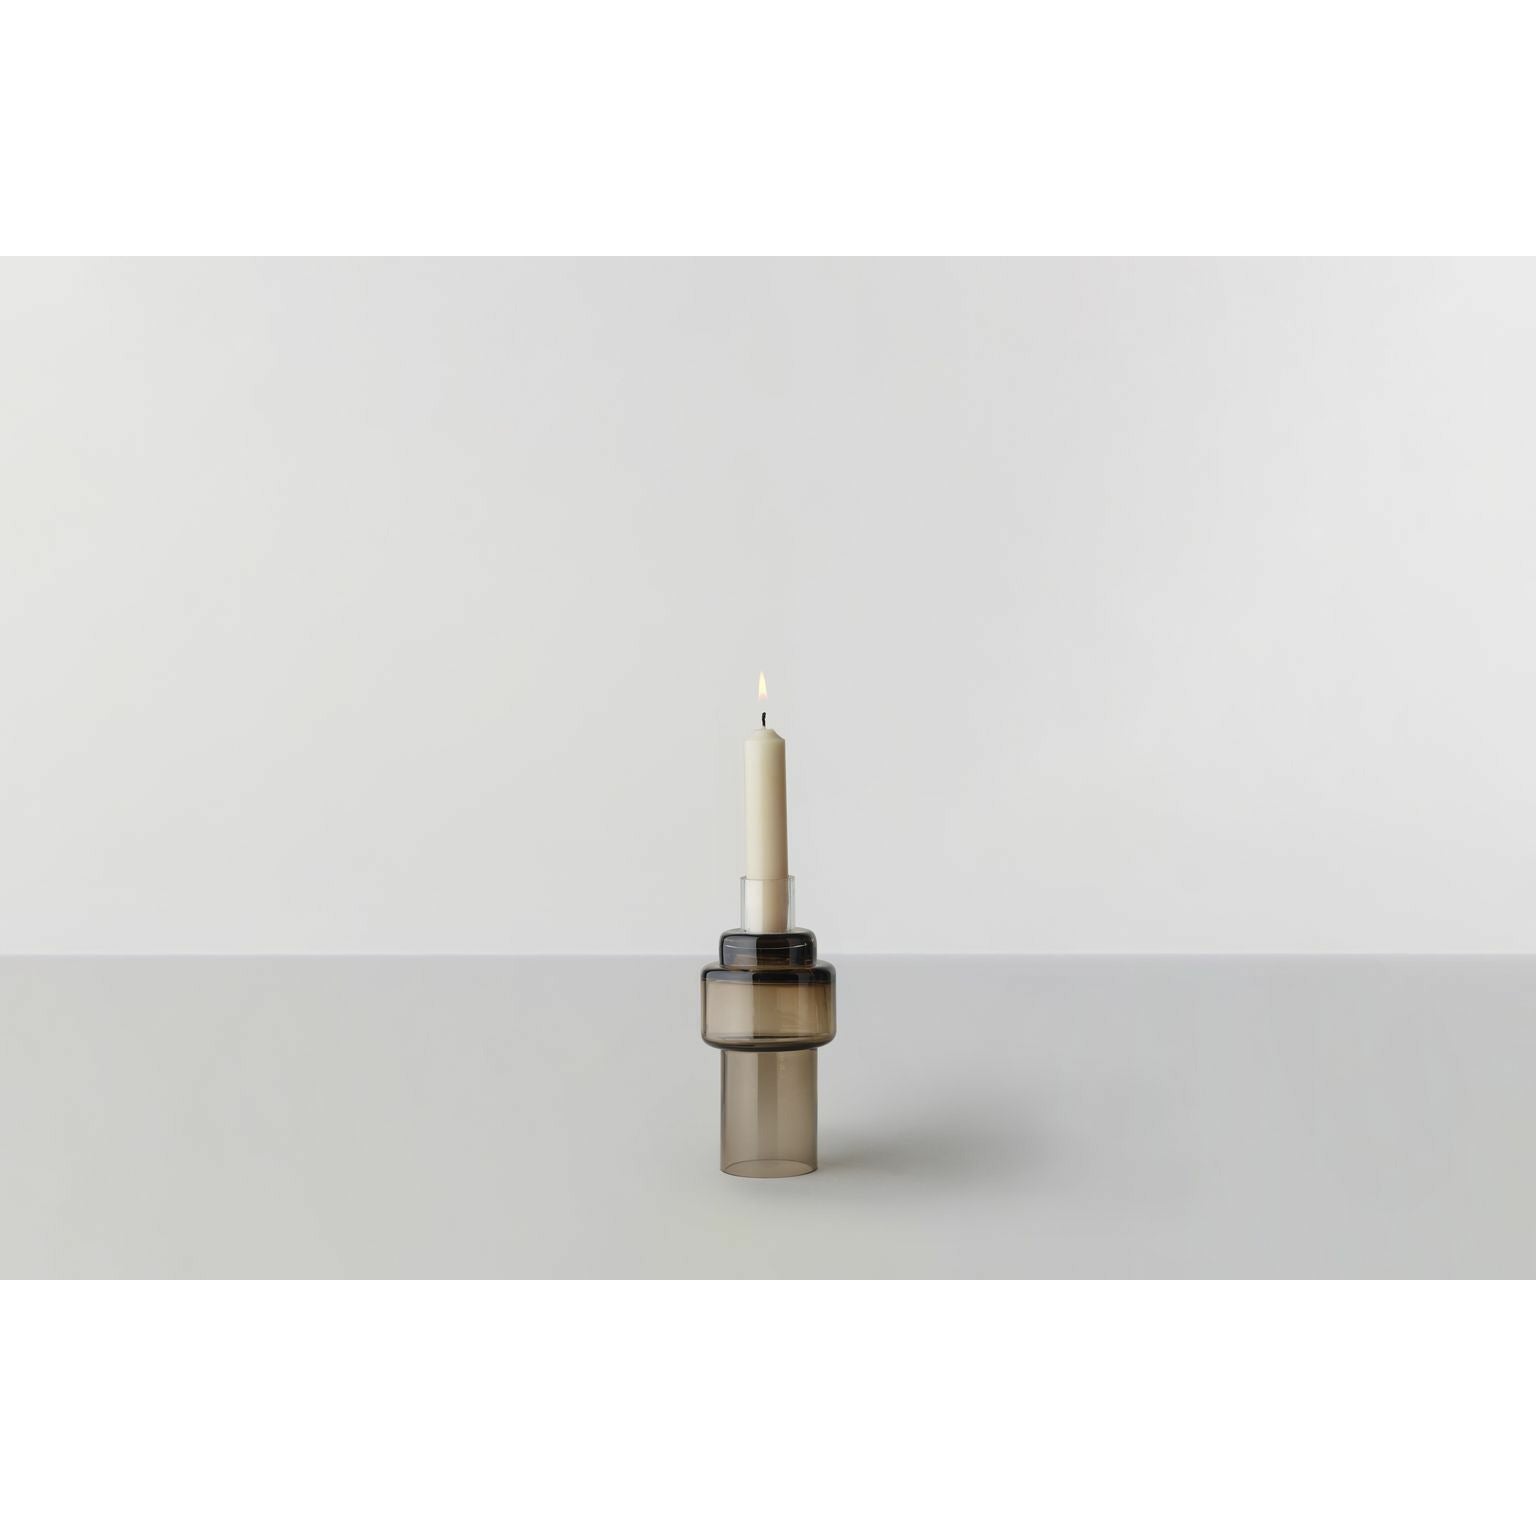 RO -Sammlung Nr. 55 Glass Candlestick, Sepia Brown